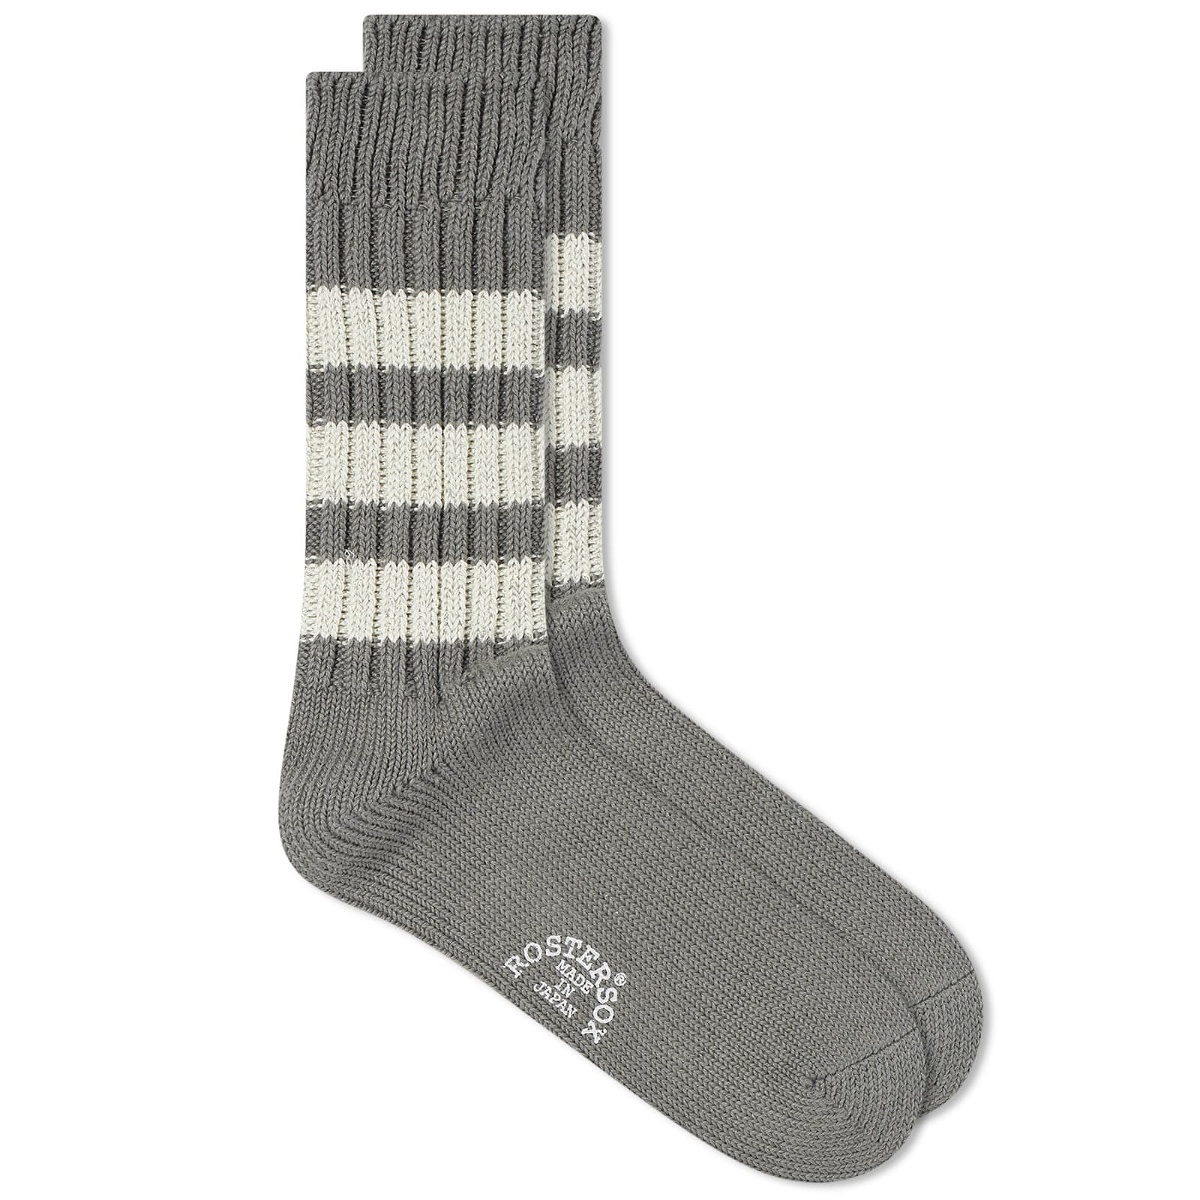 Rostersox Boston Socks in Grey Rostersox